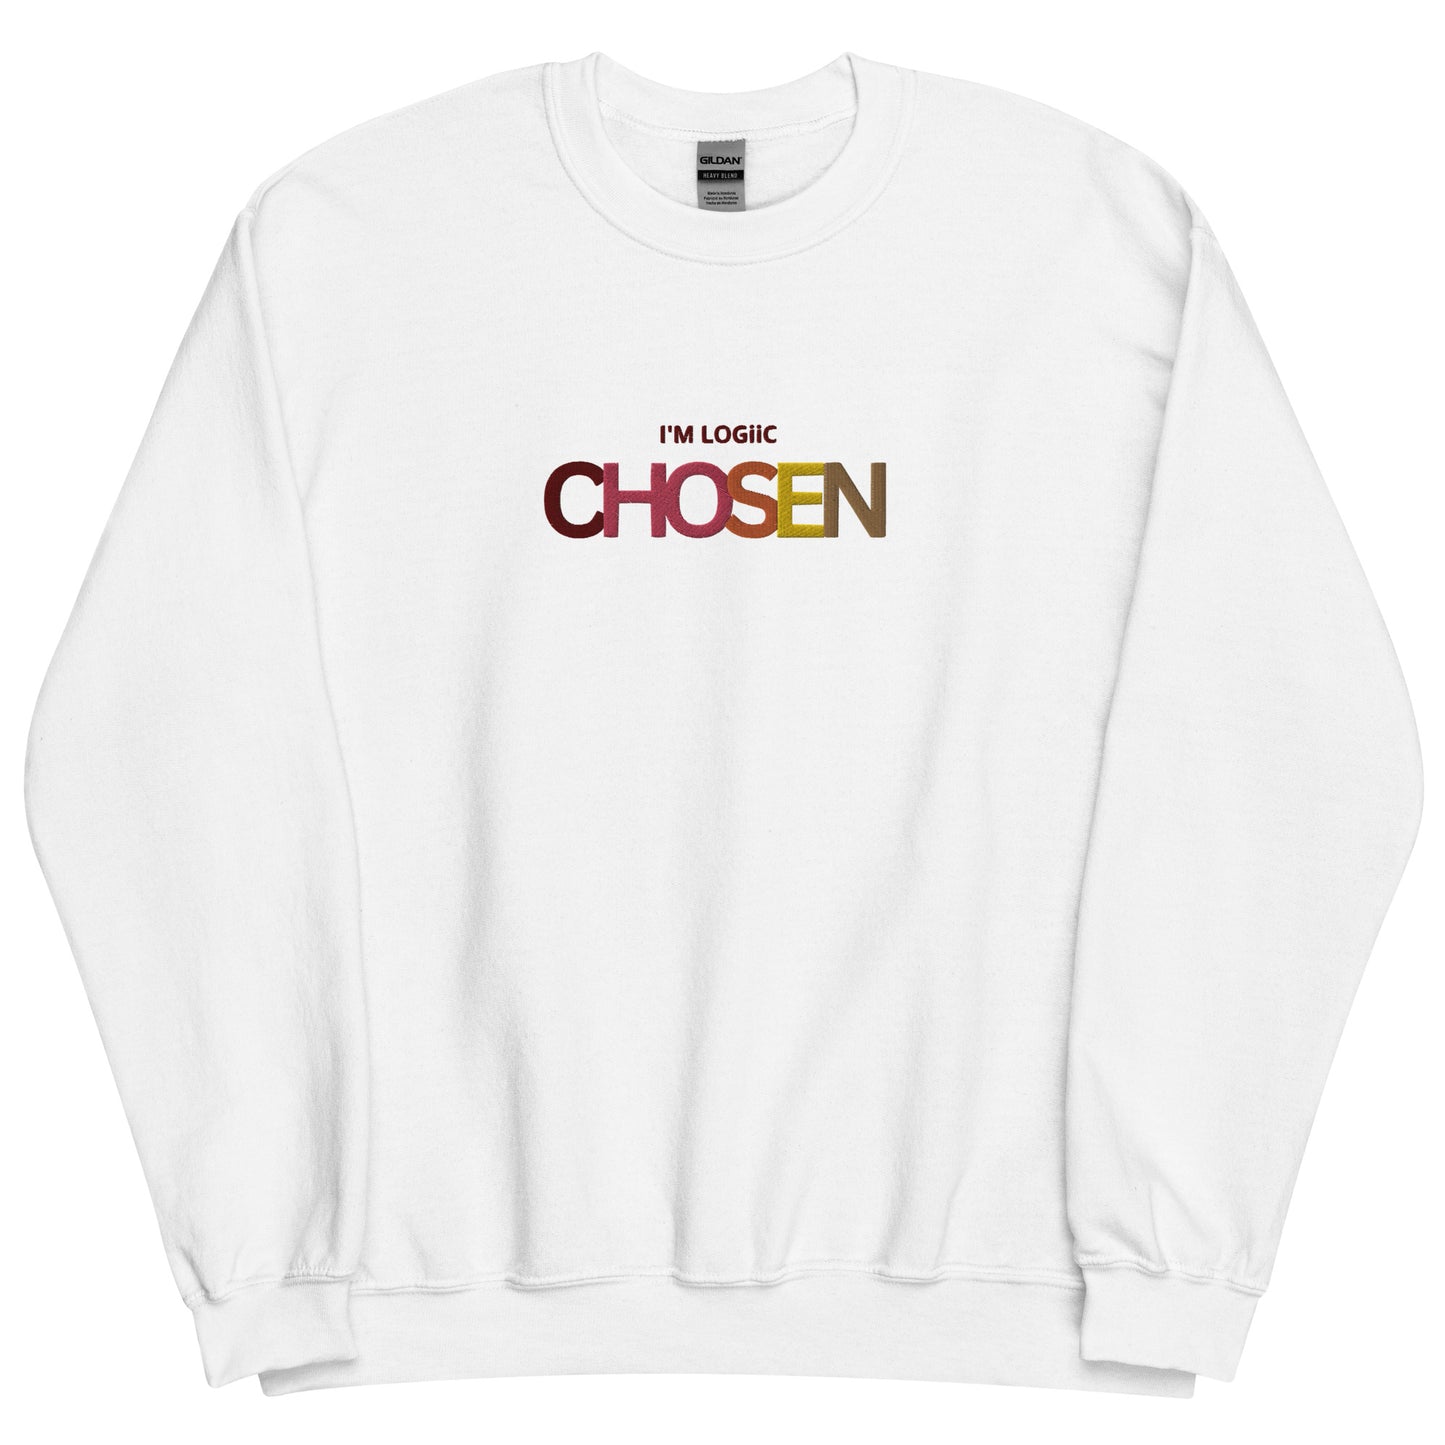 Chosen Unisex Sweatshirt - White / S